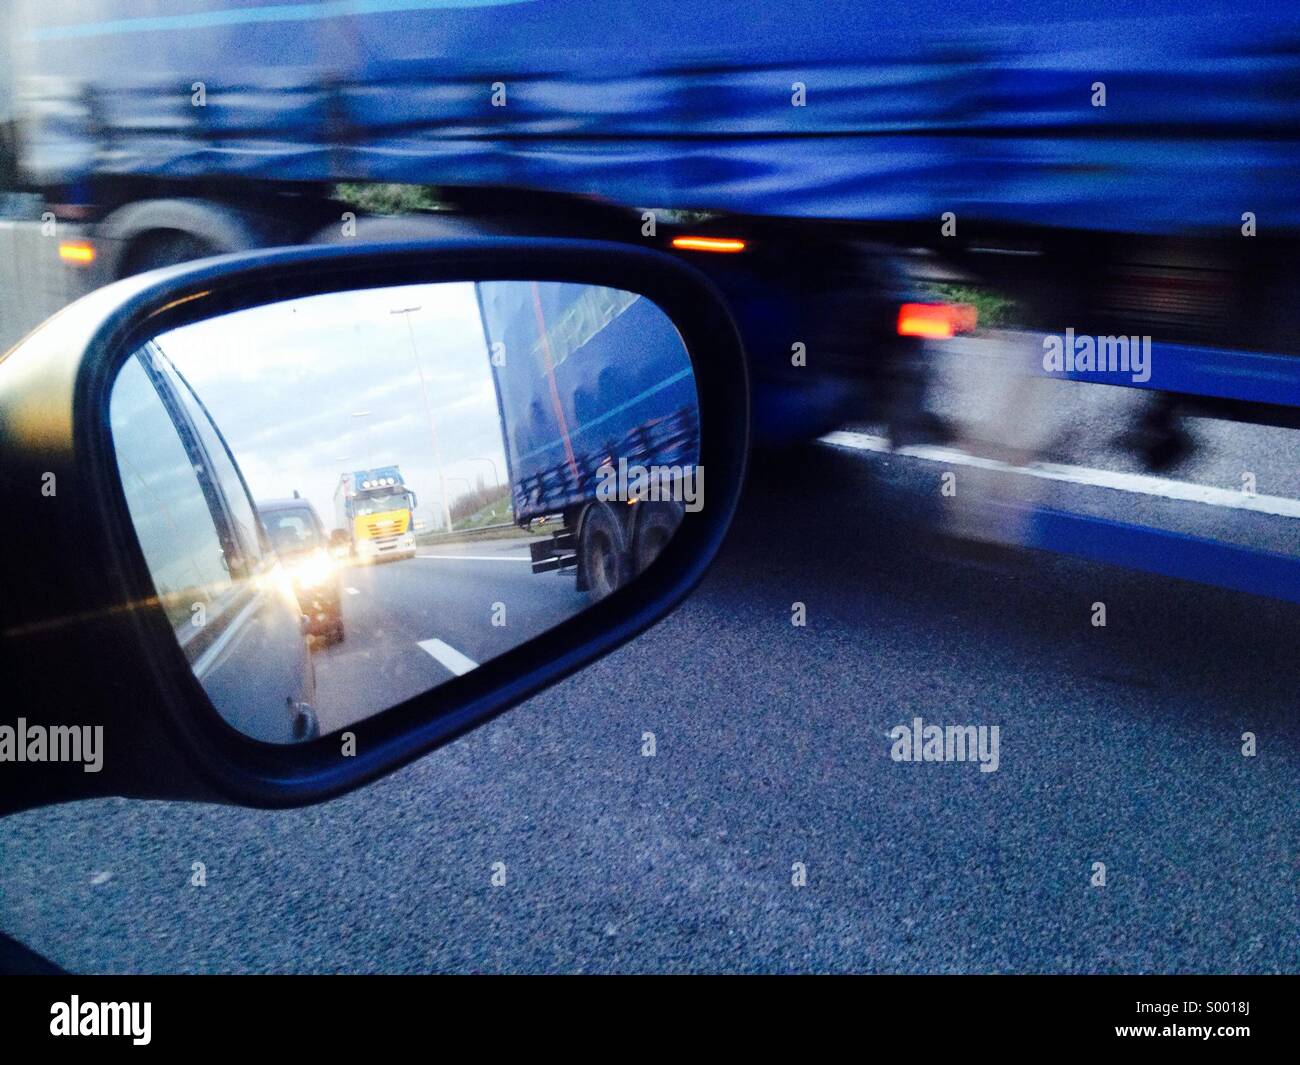 Auto rückspiegel -Fotos und -Bildmaterial in hoher Auflösung – Alamy